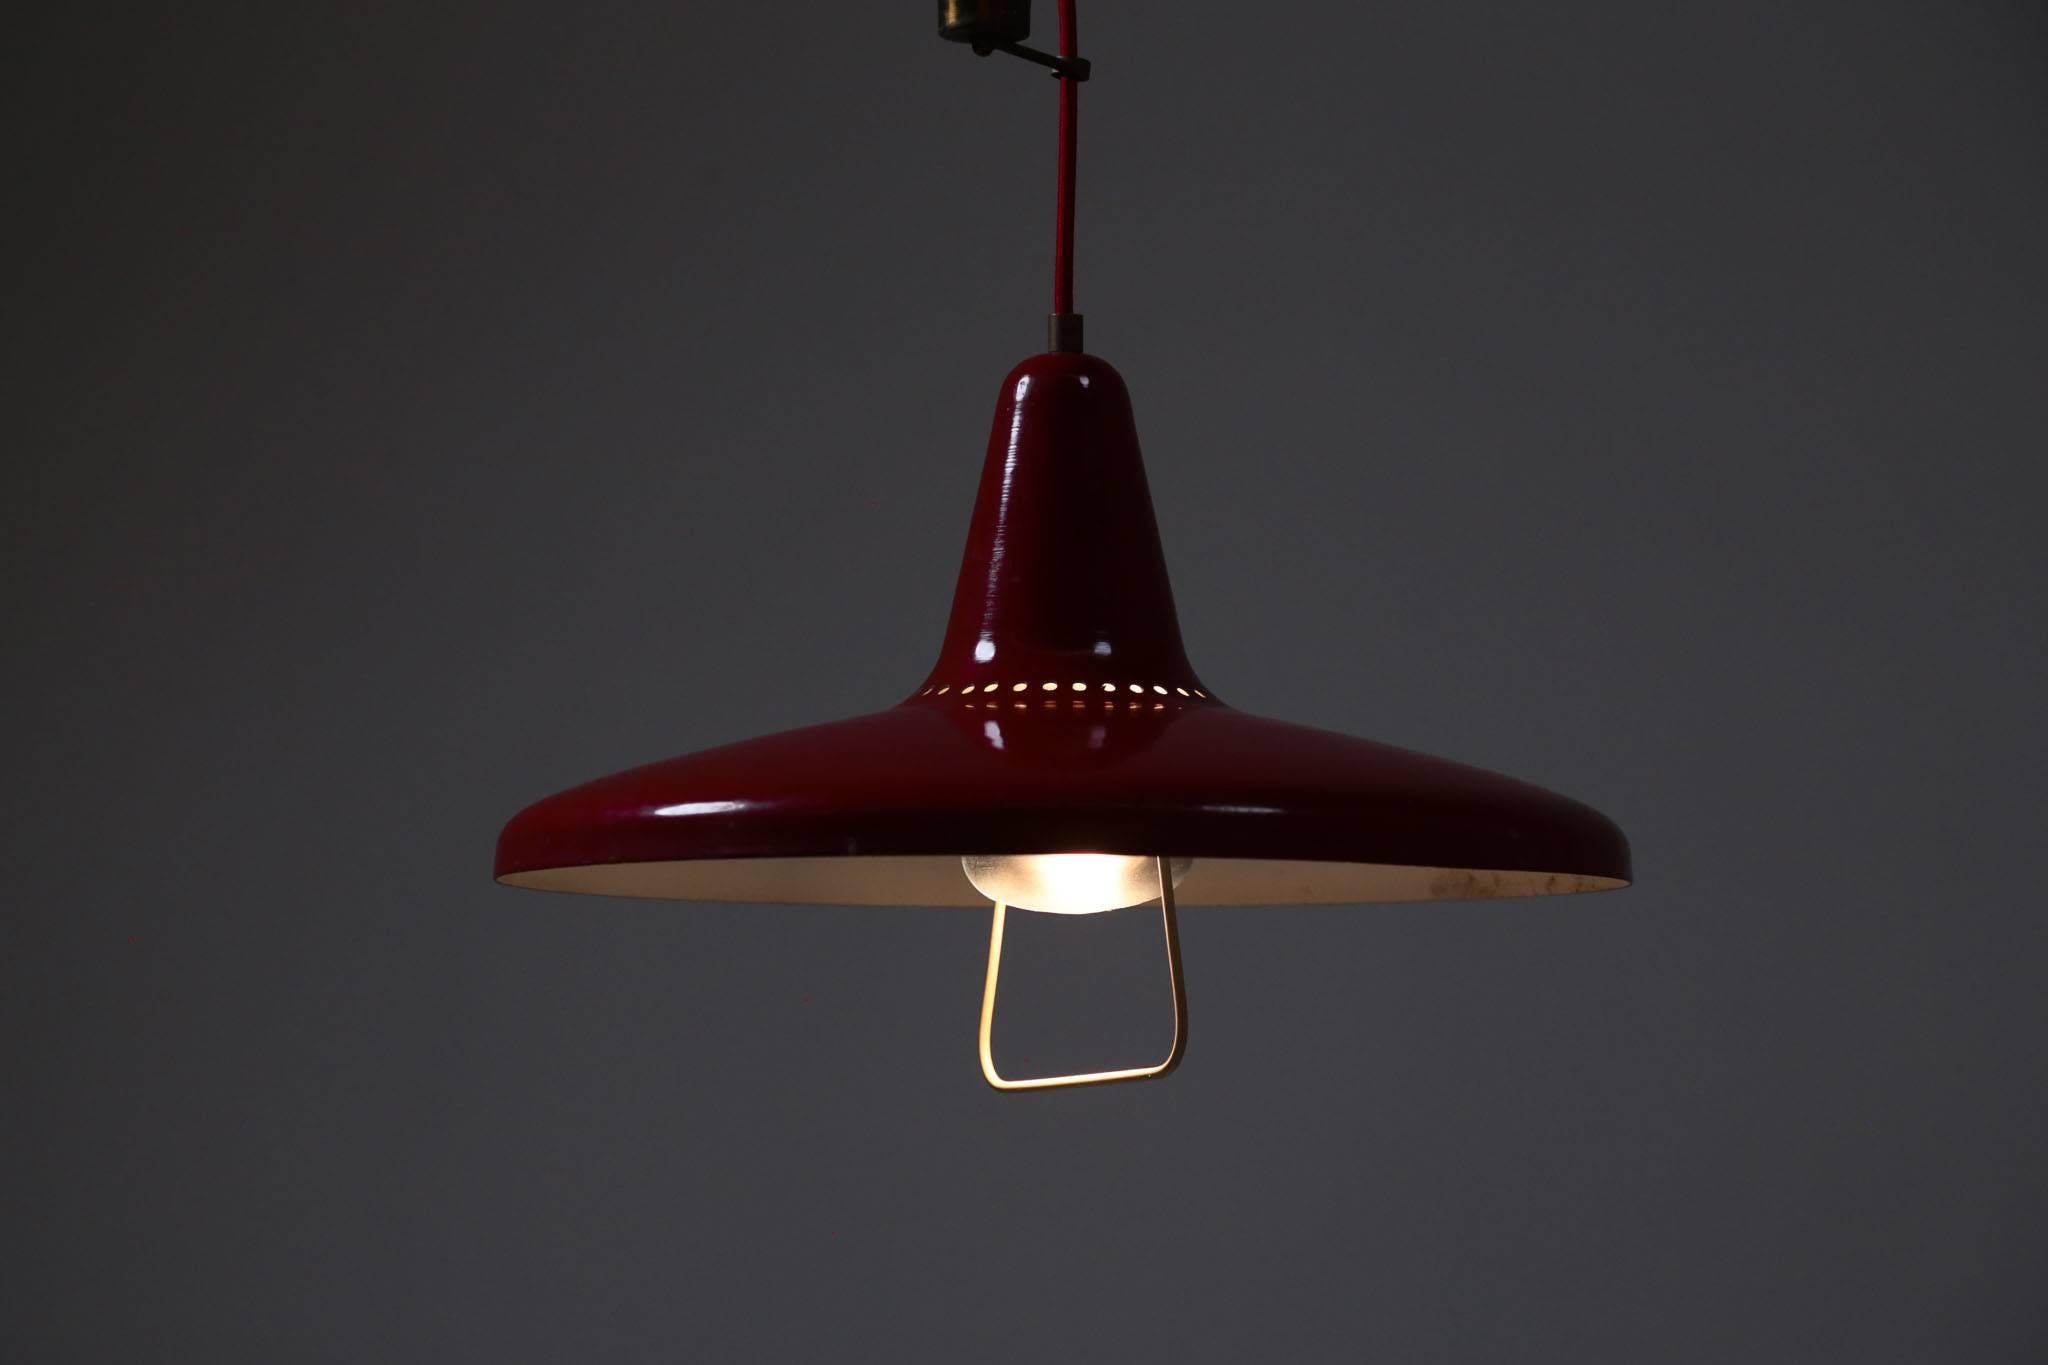 Steel Italian Counter Balance Pendant Lamp, 1960s, Midcentury